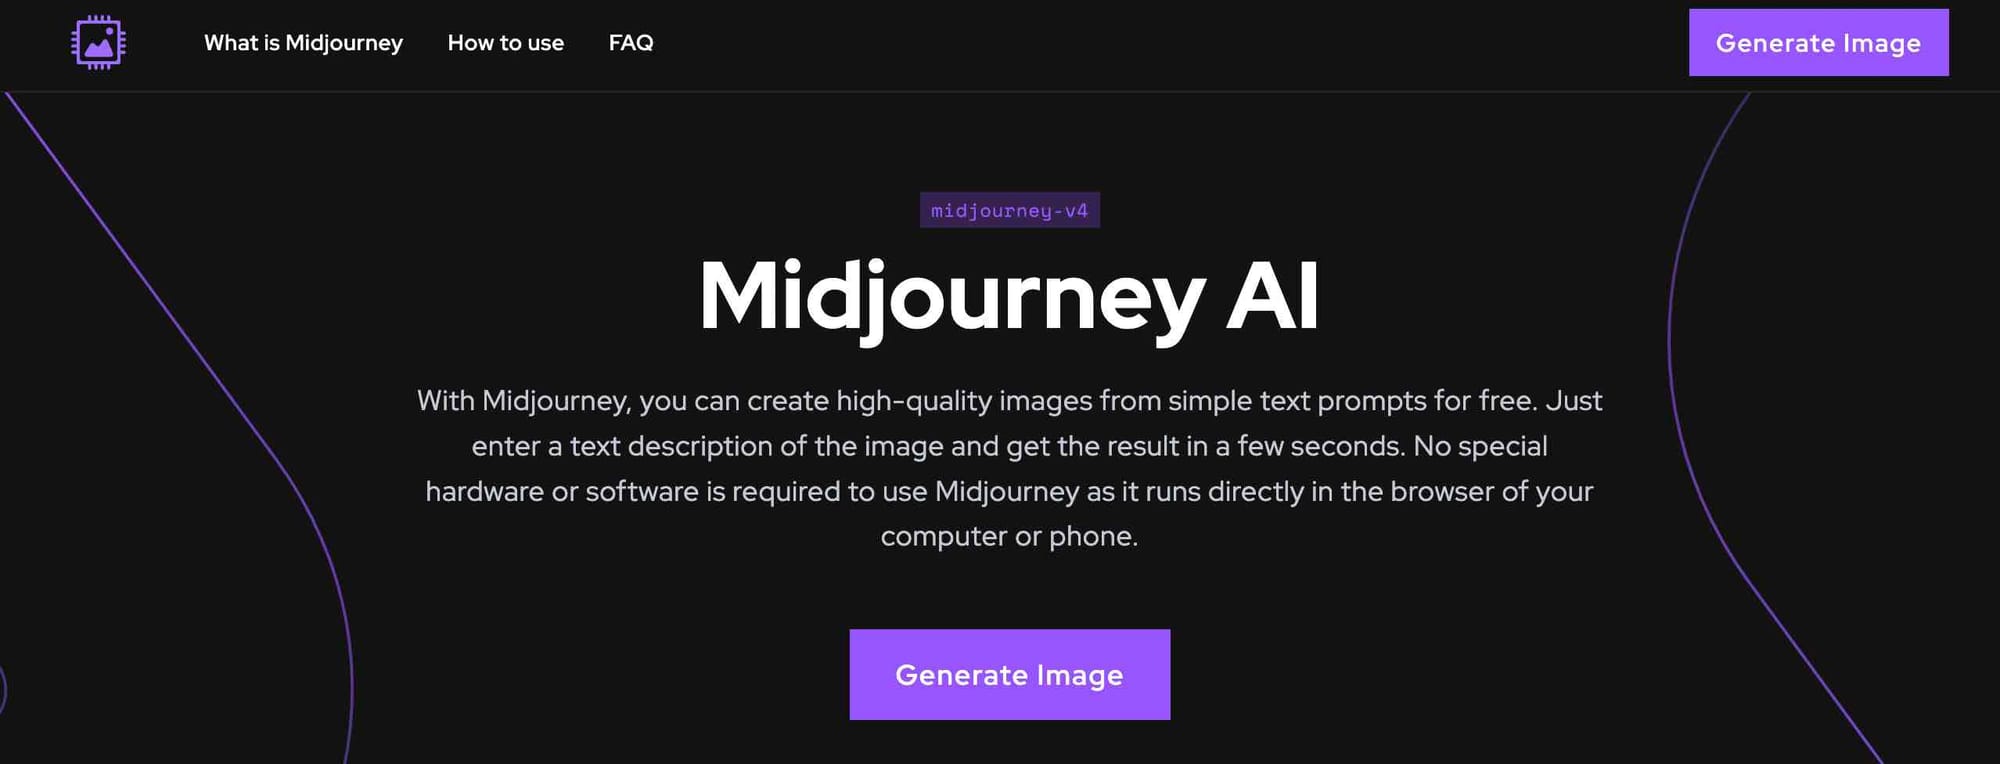 AI tool Midjourney's website homepage.